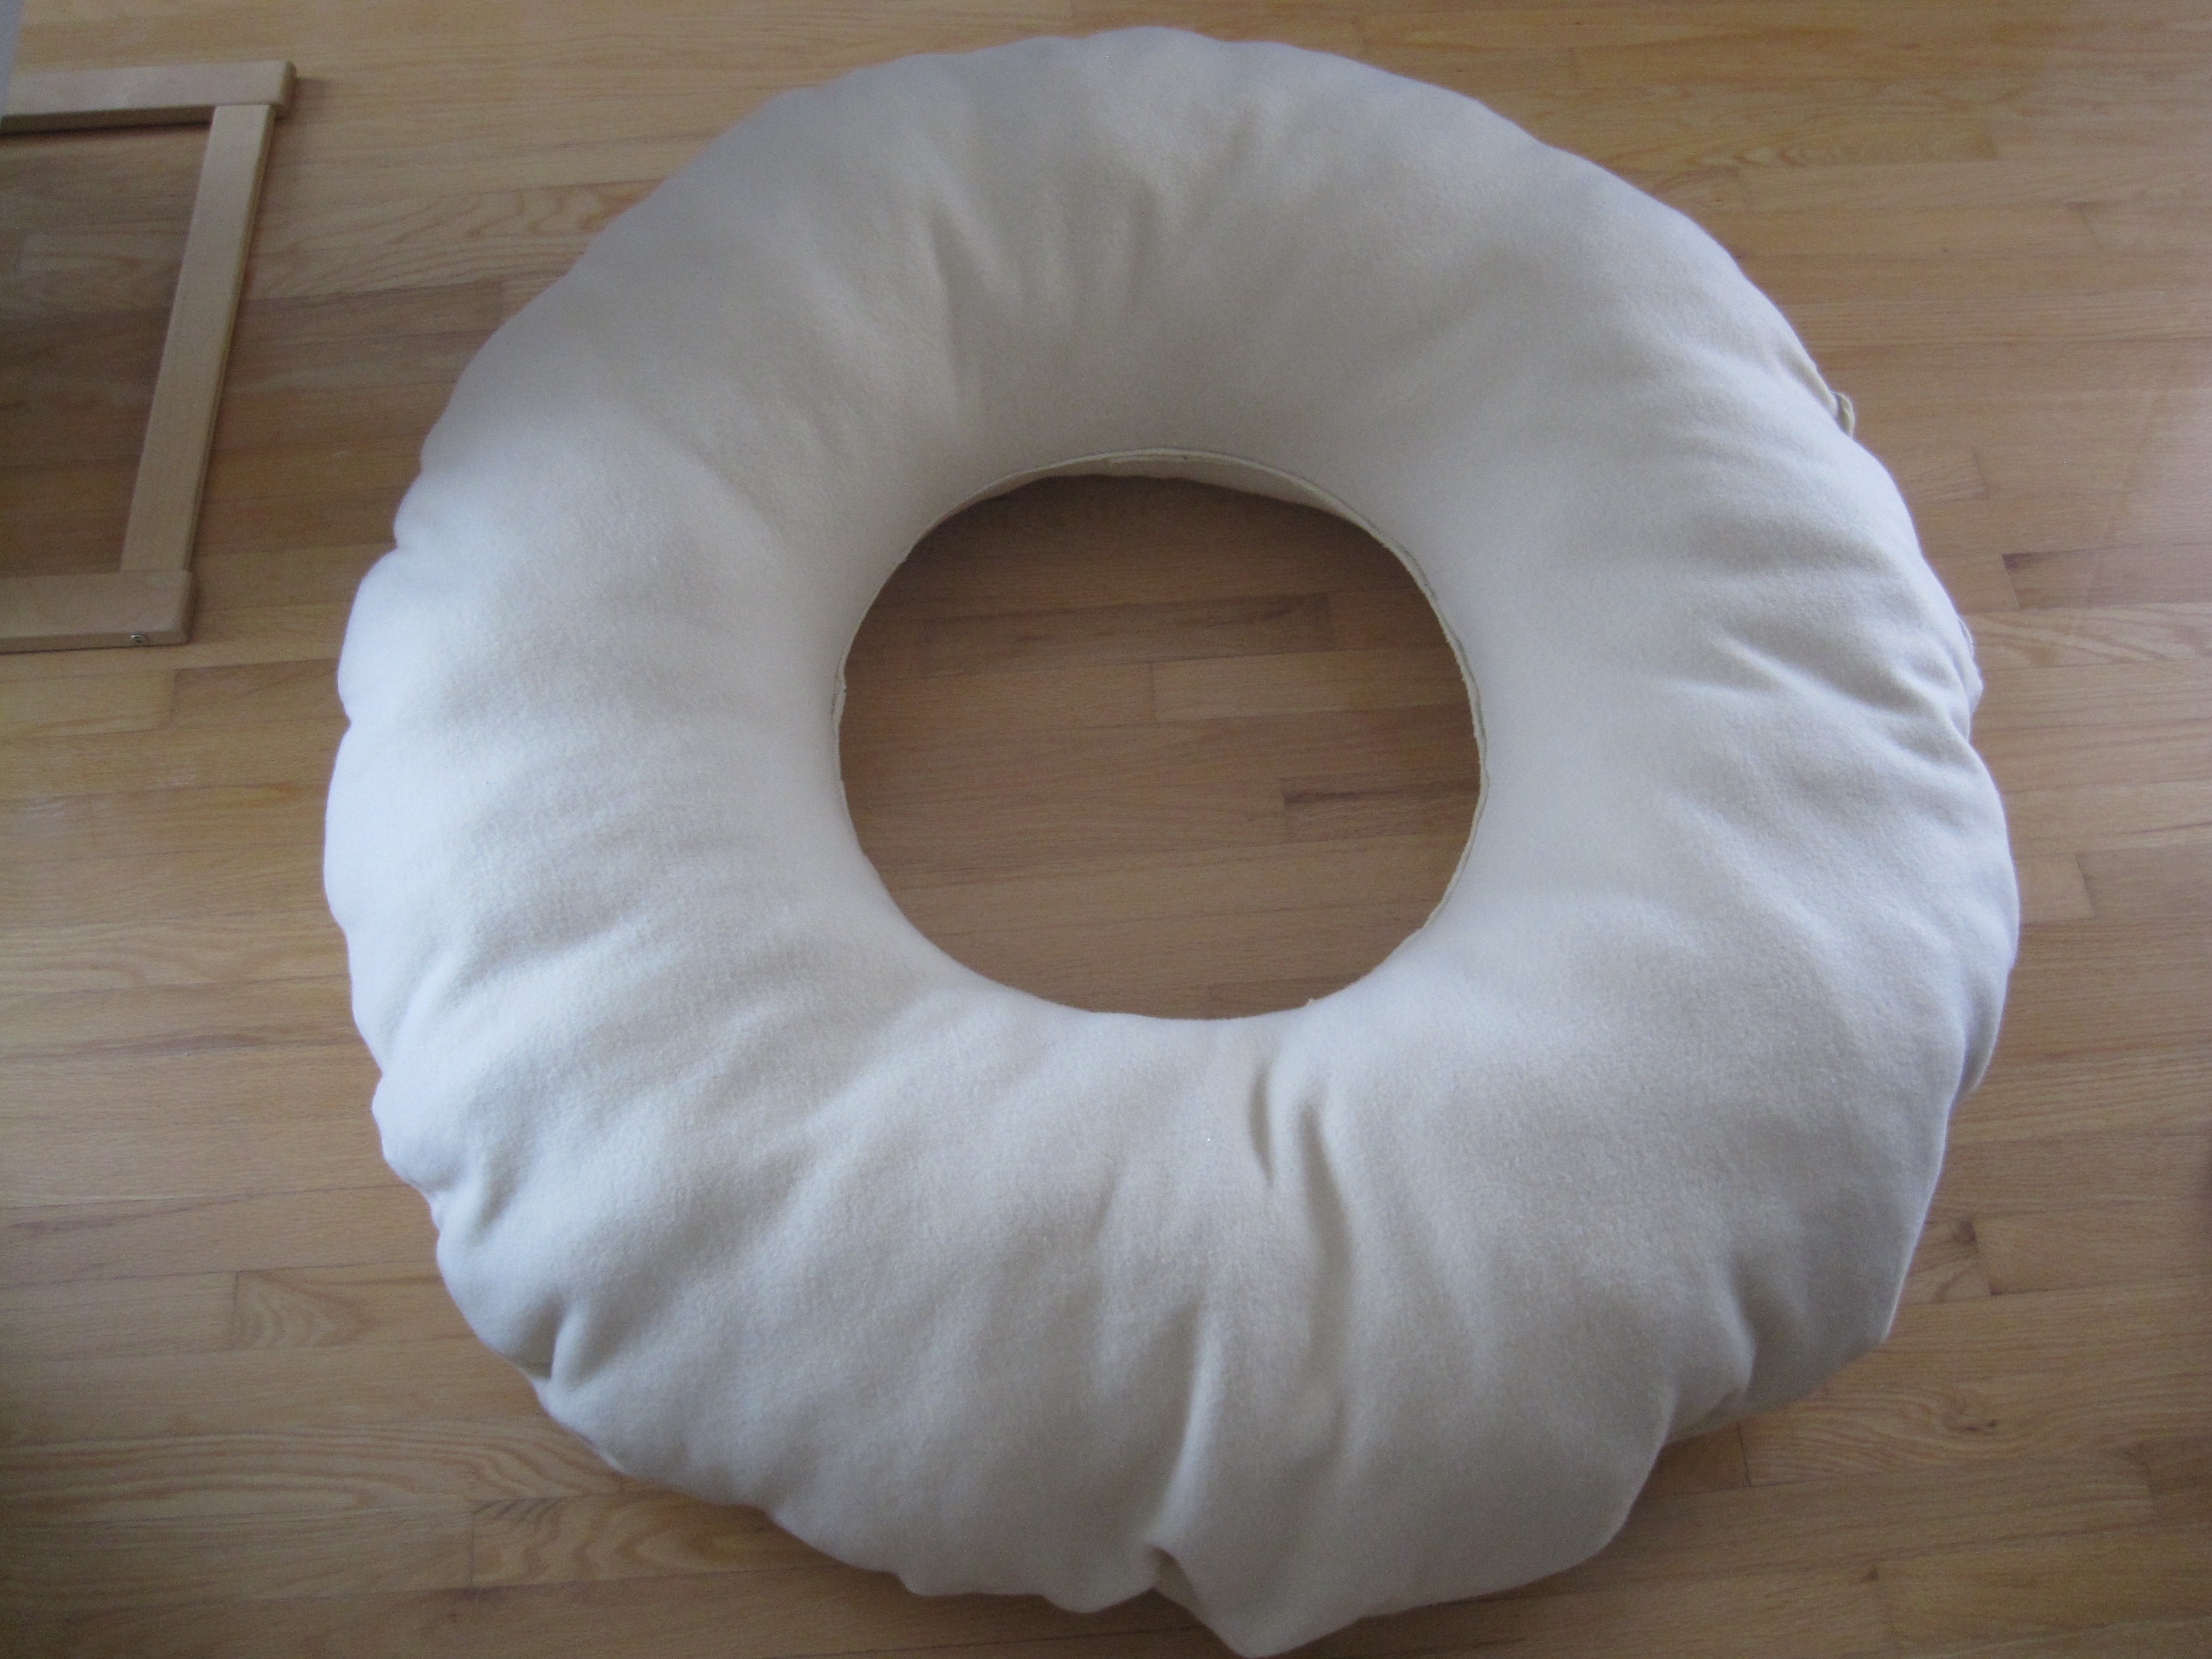 Donut Pillow, Giant Chocolate donut, Donut decor pillow, Donut